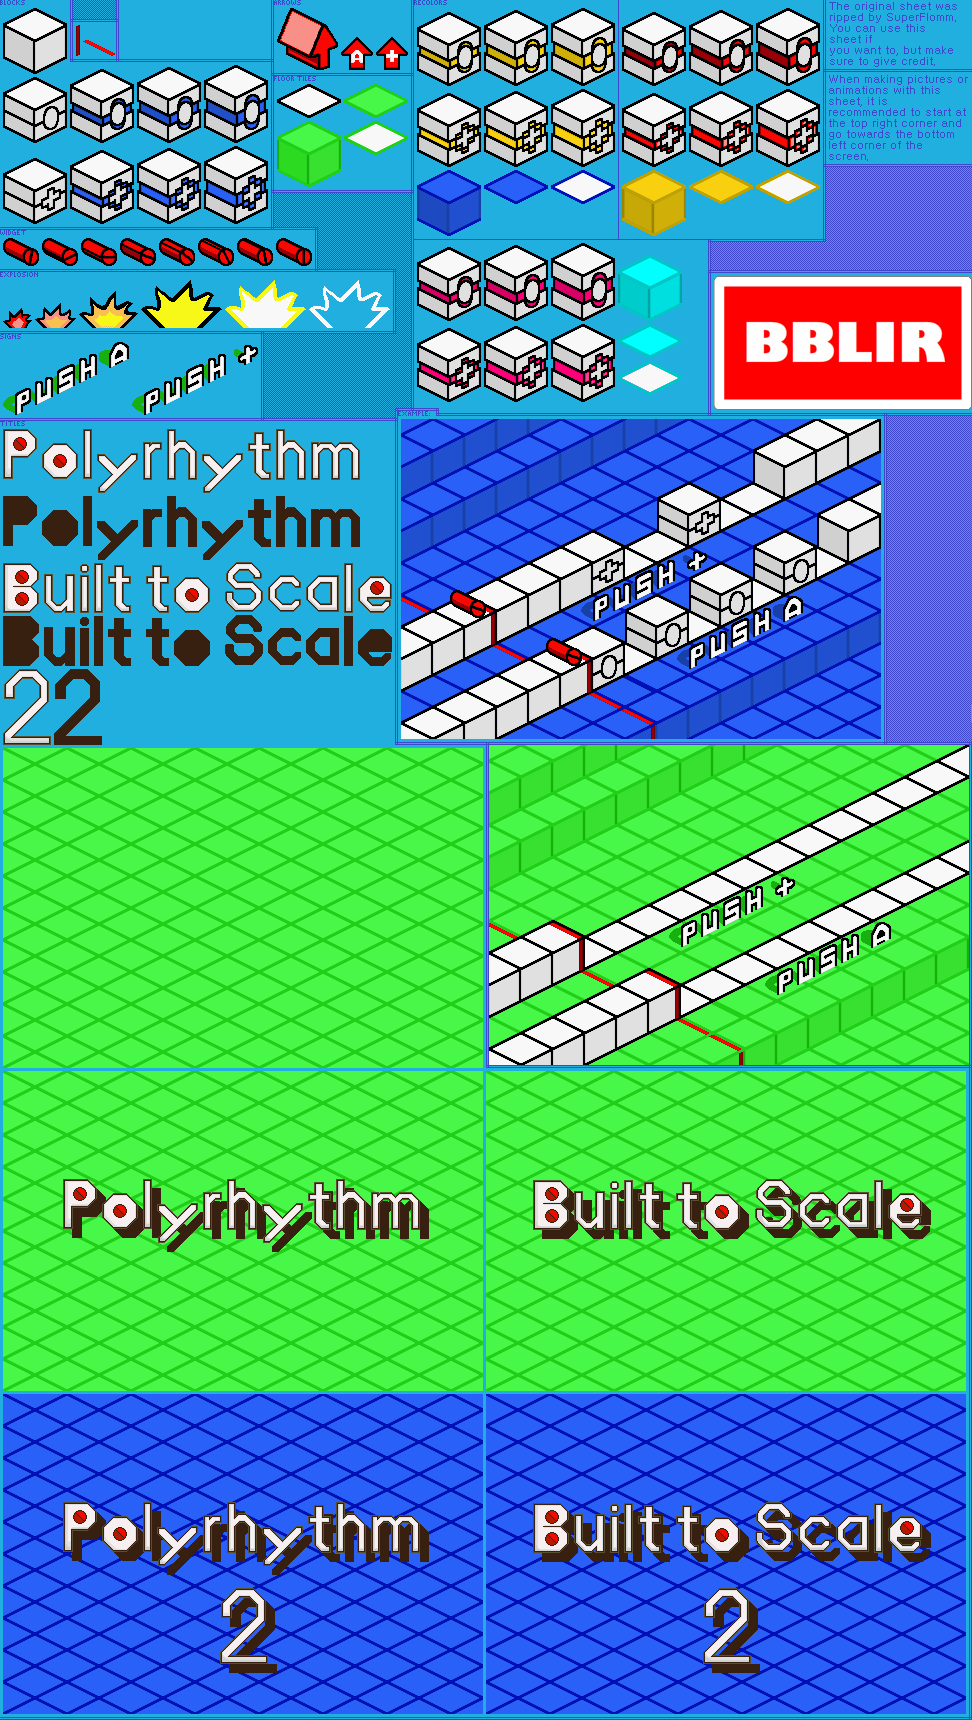 Polyrhythm / Built to Scale